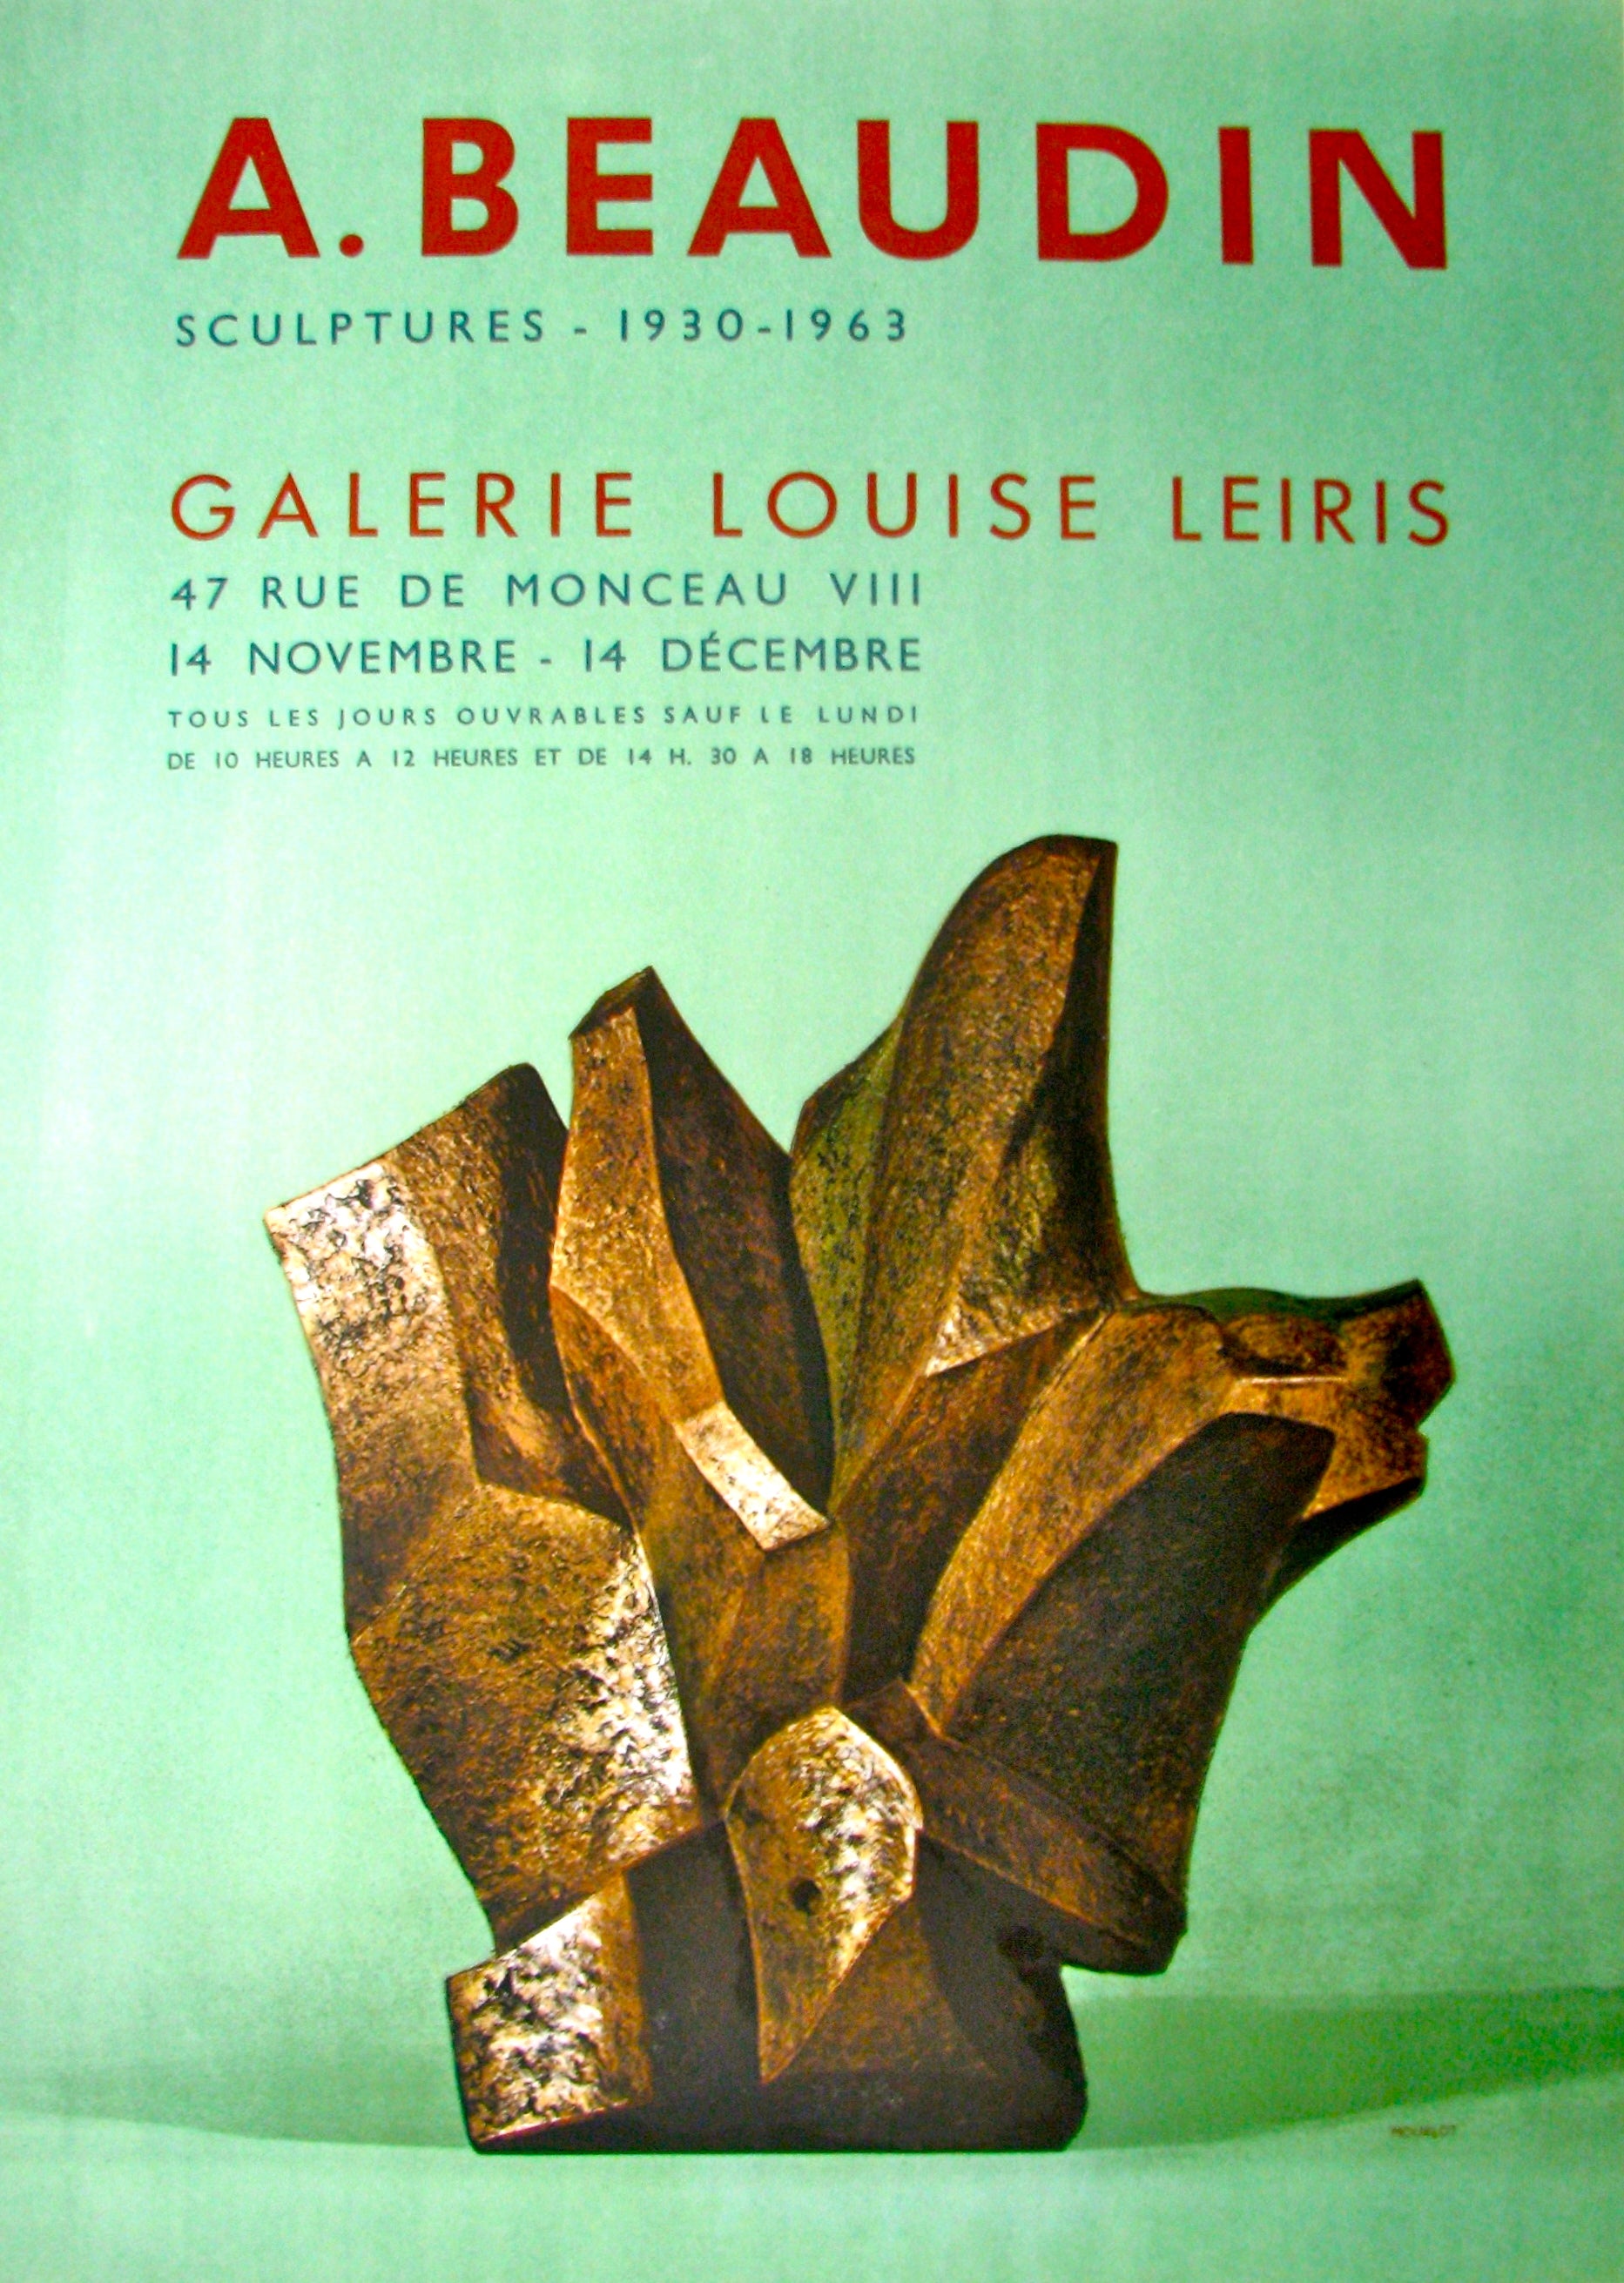 Sculptures - Galerie Louise Leiris (after) André Beaudin, 1963 - Mourlot Editions - Fine_Art - Poster - Lithograph - Wall Art - Vintage - Prints - Original